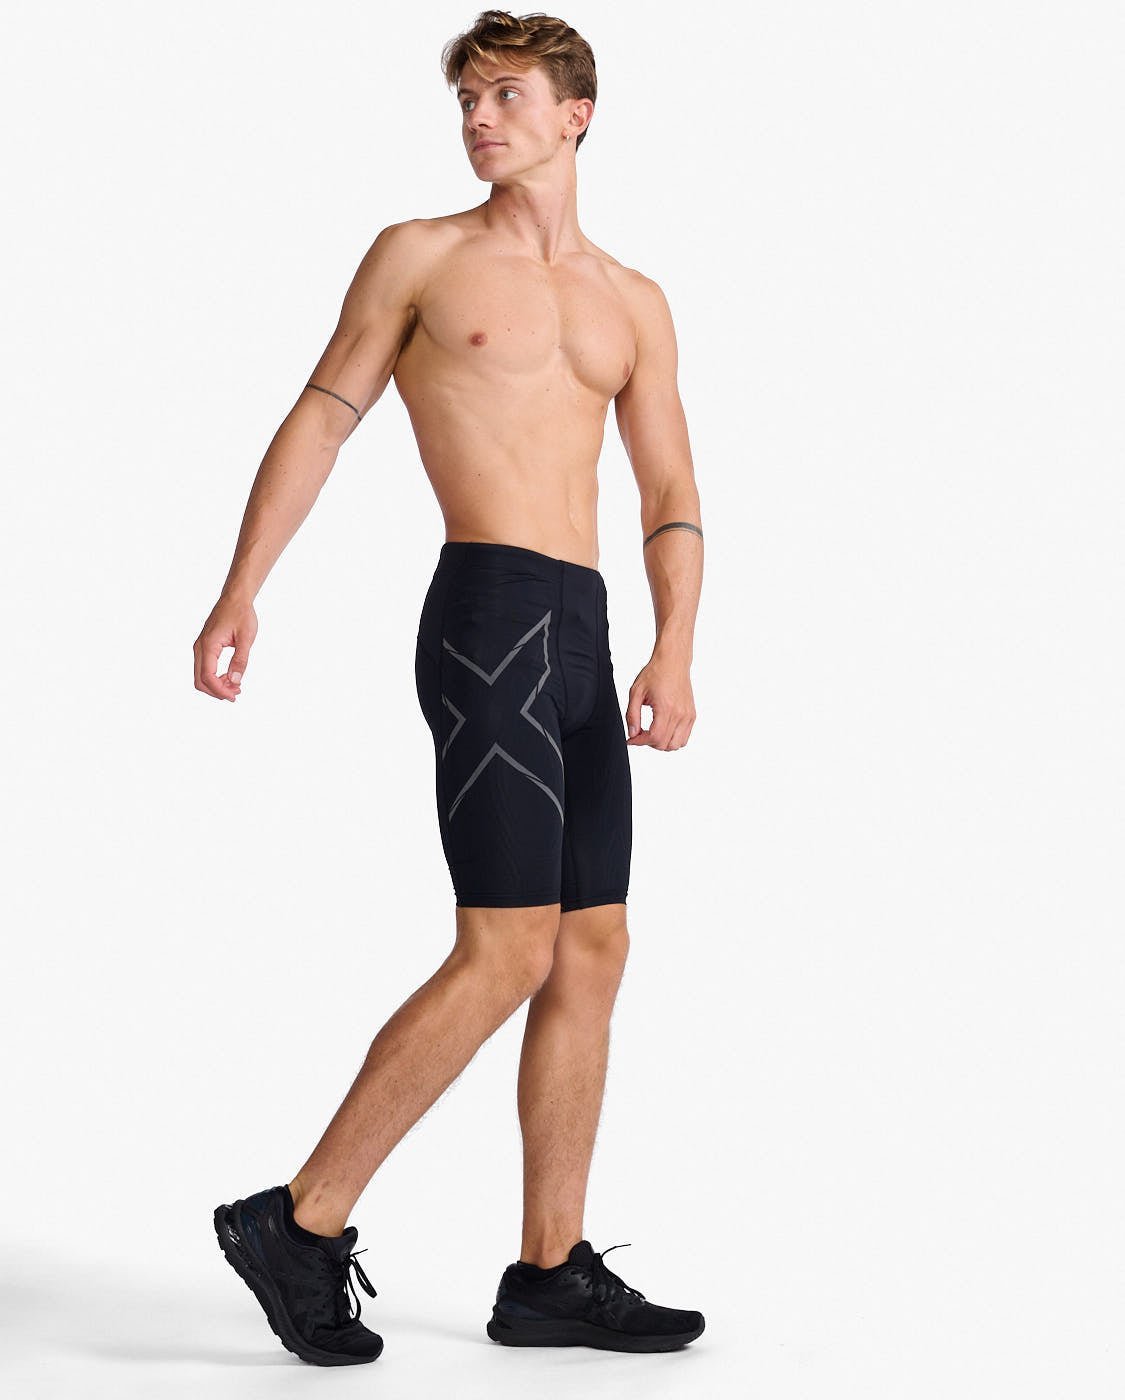 2XU South Africa - Men's Light Speed Compression Shorts - Black/Black Reflective